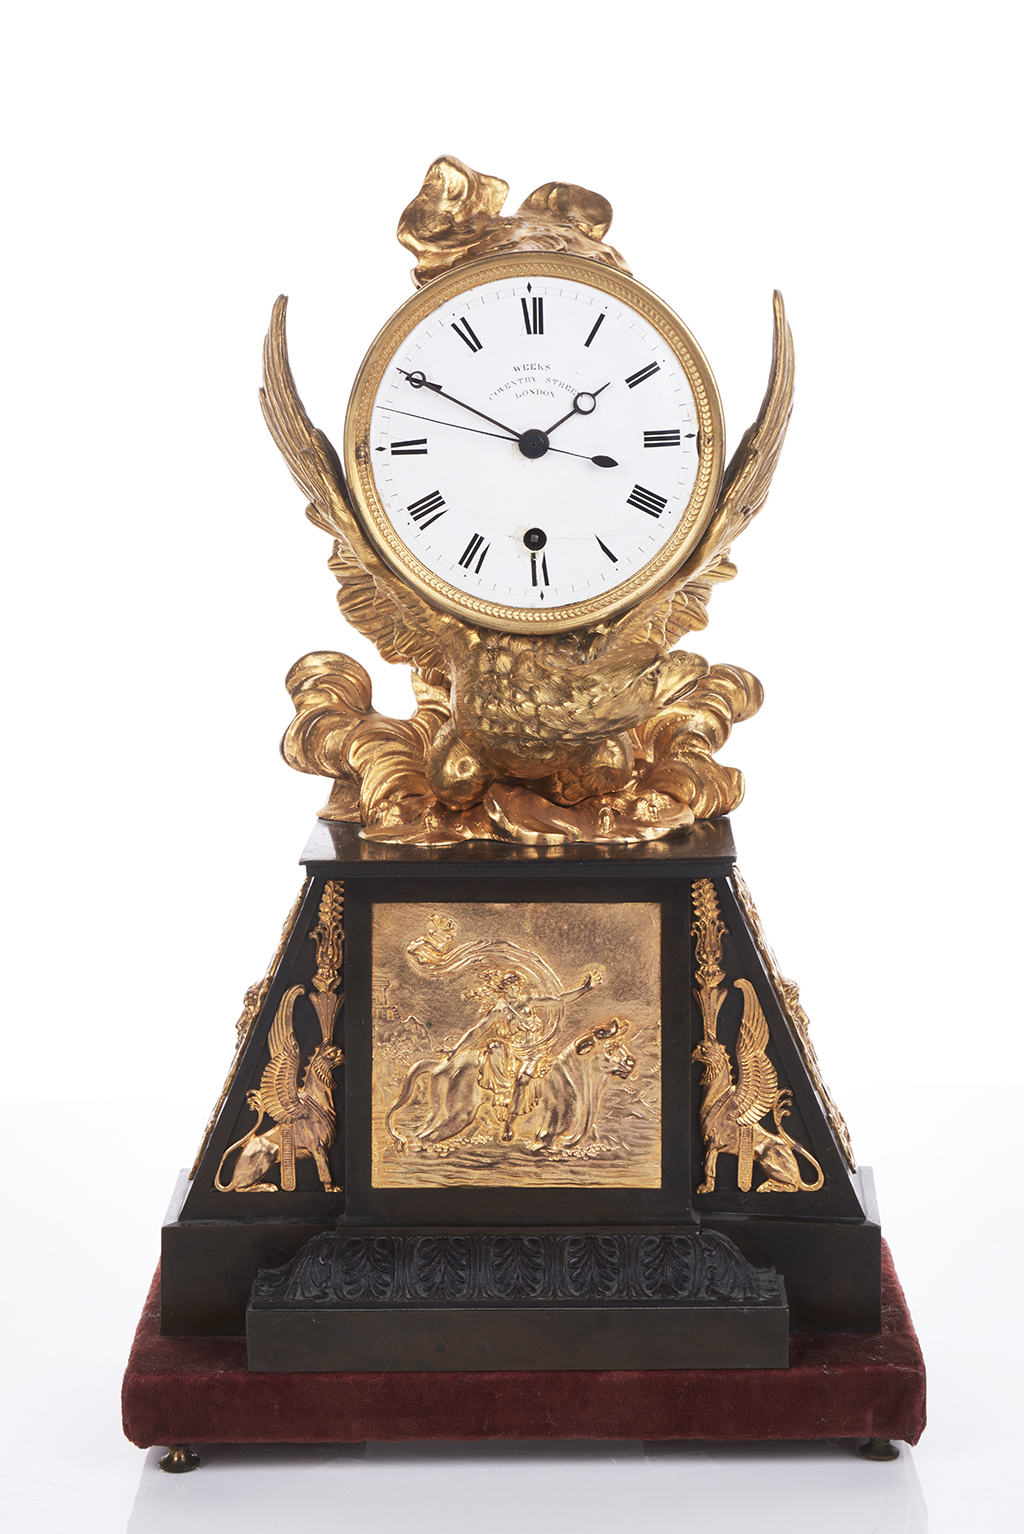 Regency Bronze and Ormolu Mantel Clock